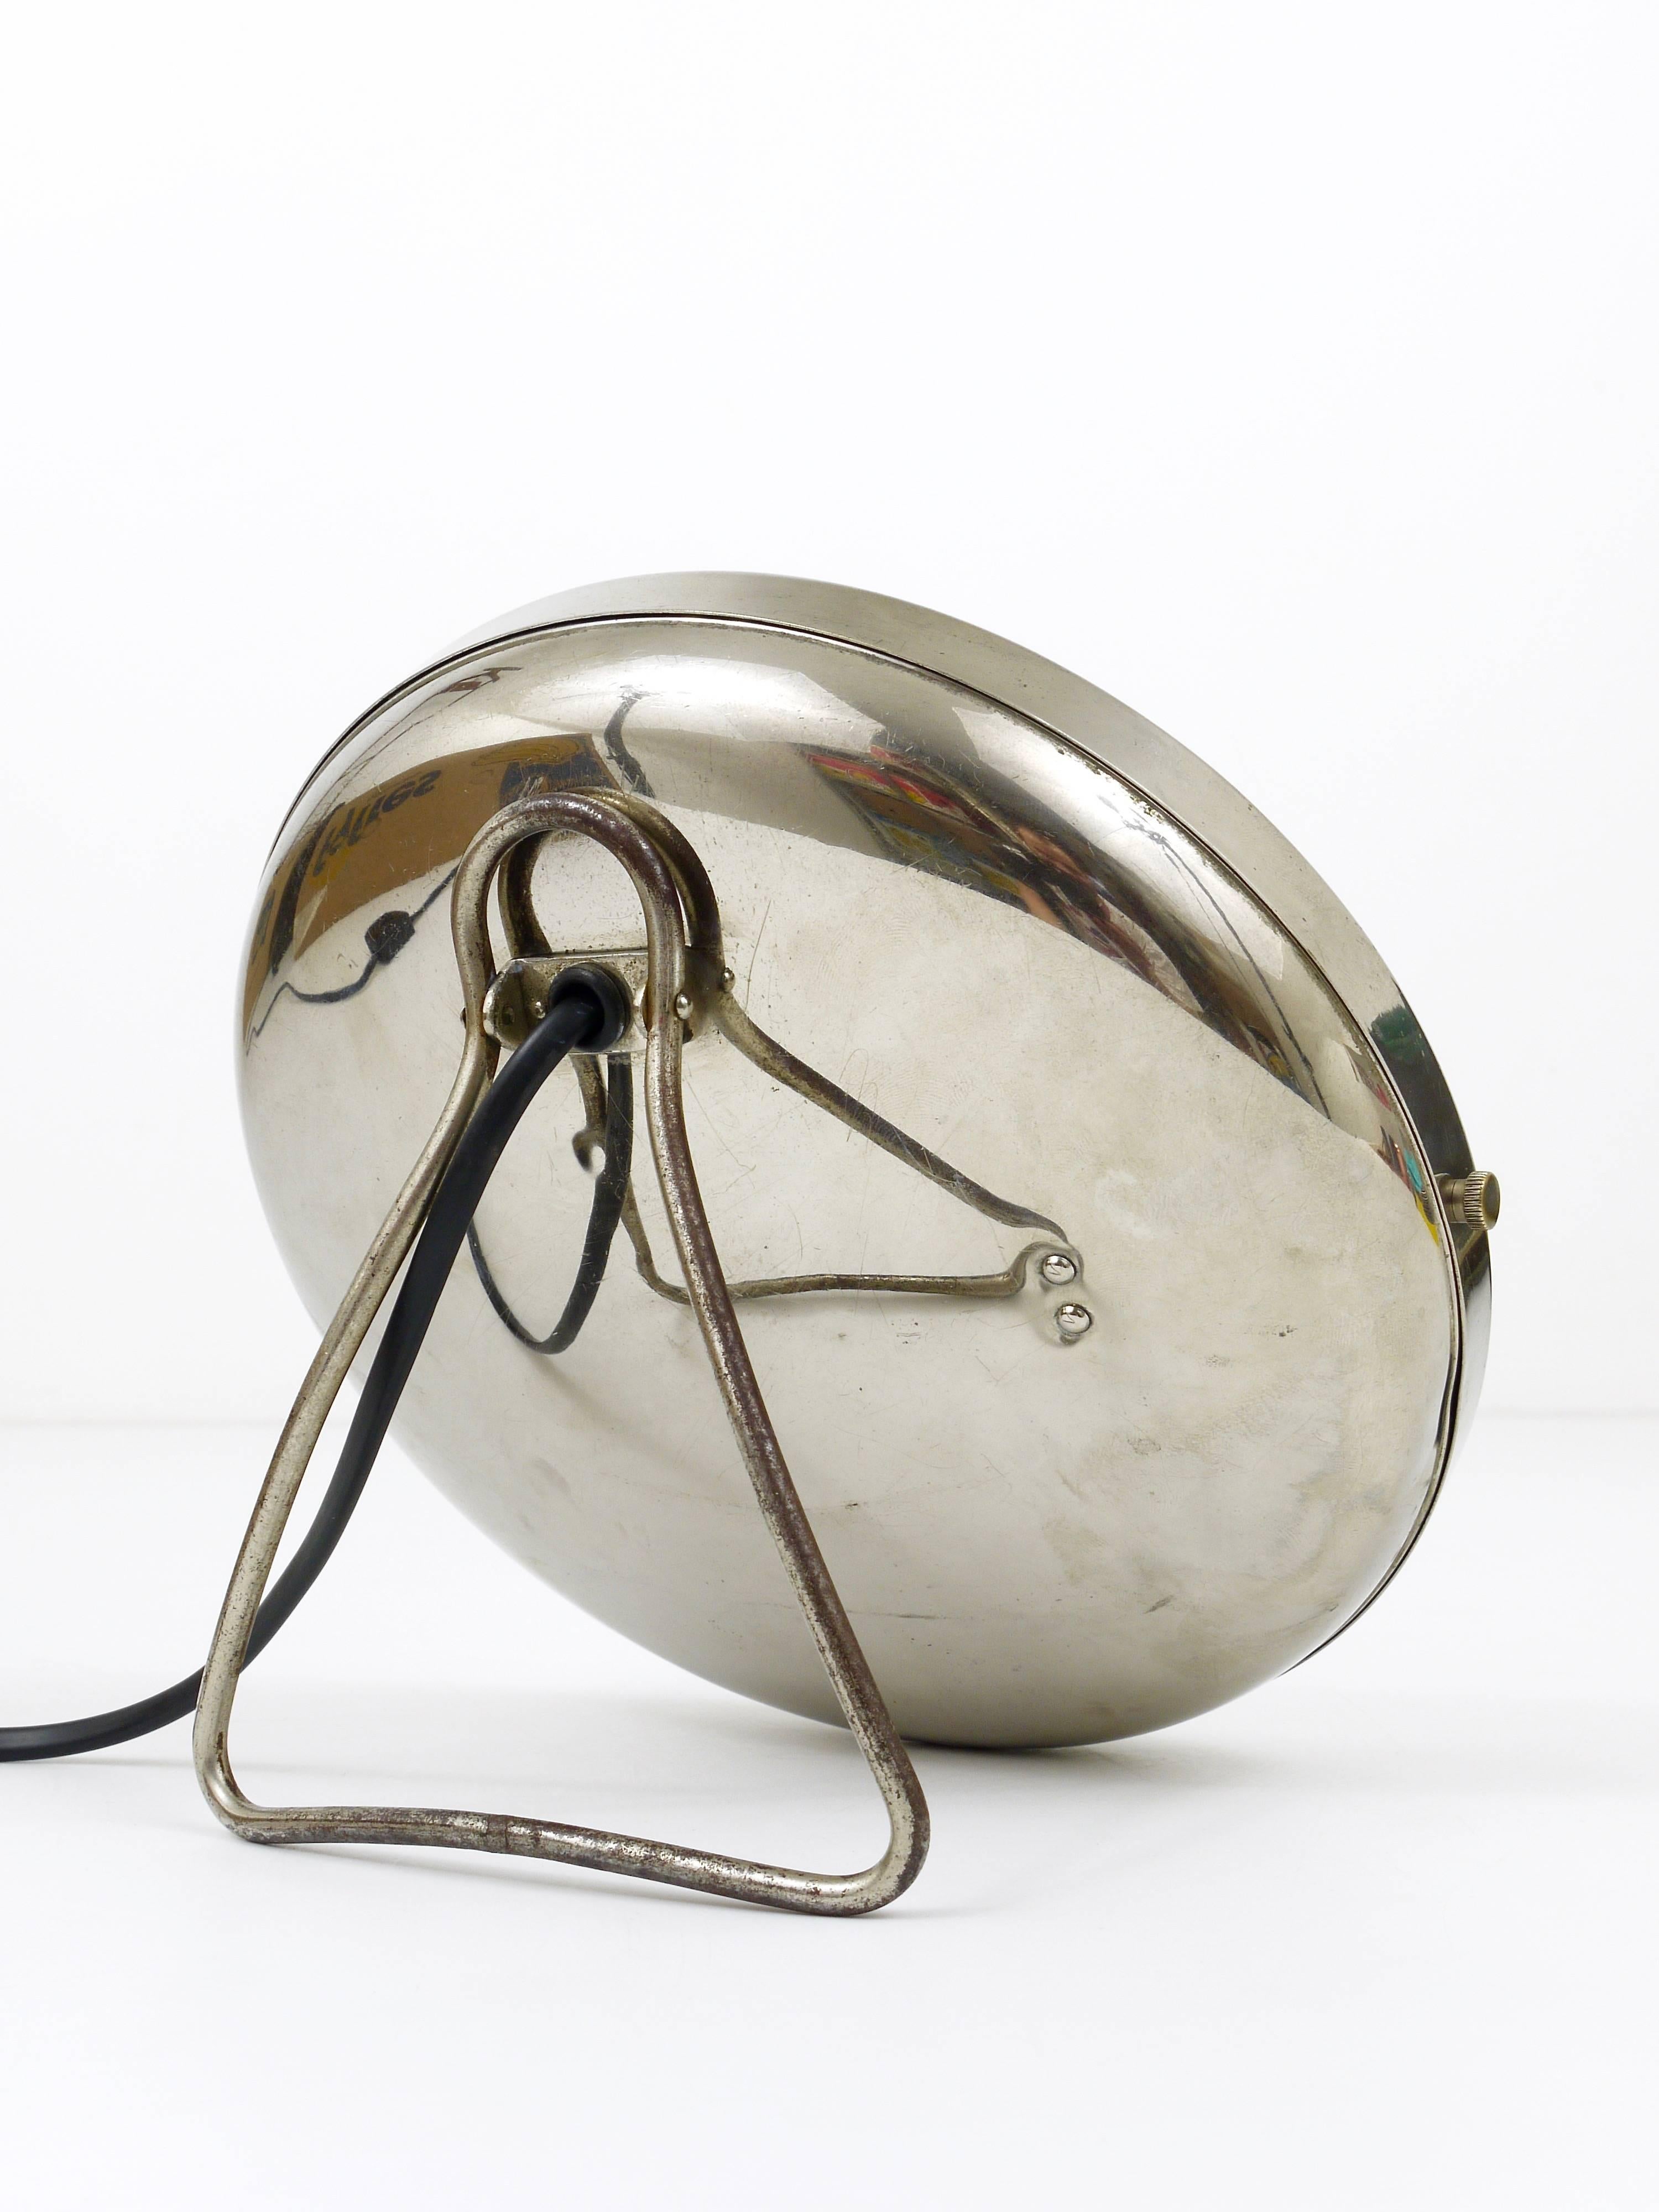 Illuminated Shaving or Vanity Mirror by Marcel Breuer, Bauhaus for Zeiss Ikon 1